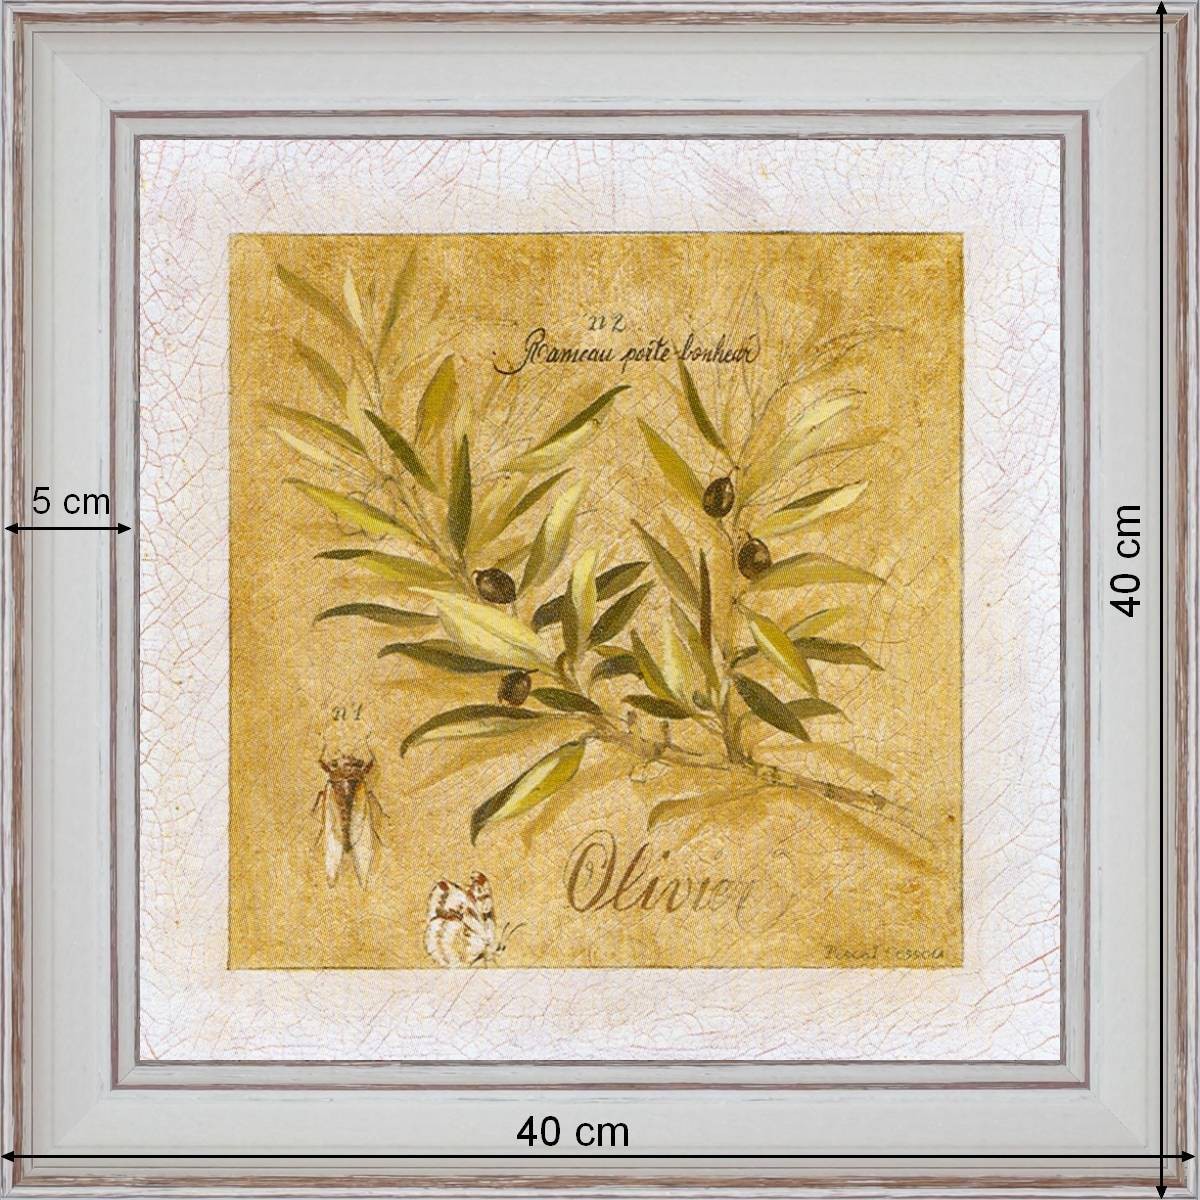 Olive-tree - dimensions 40 x 40 cm